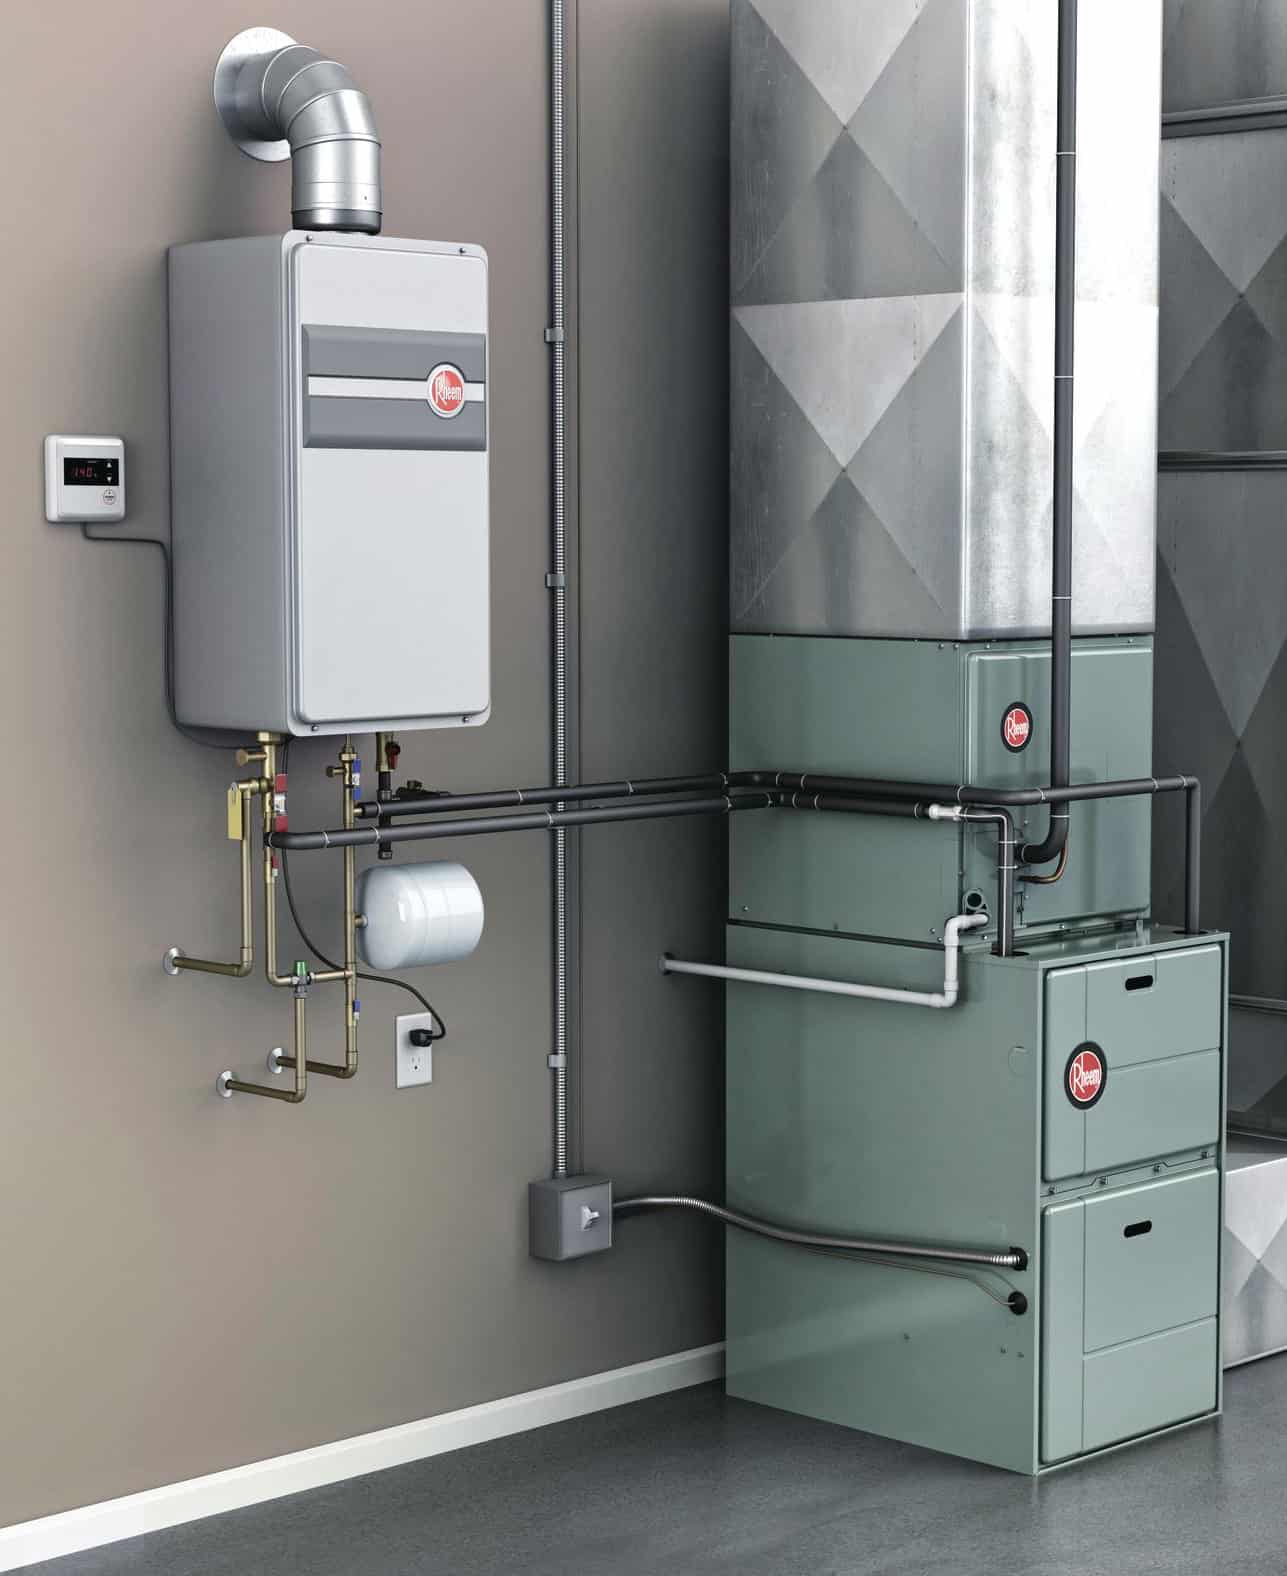 Heat Pump Water Heater Cost Savings